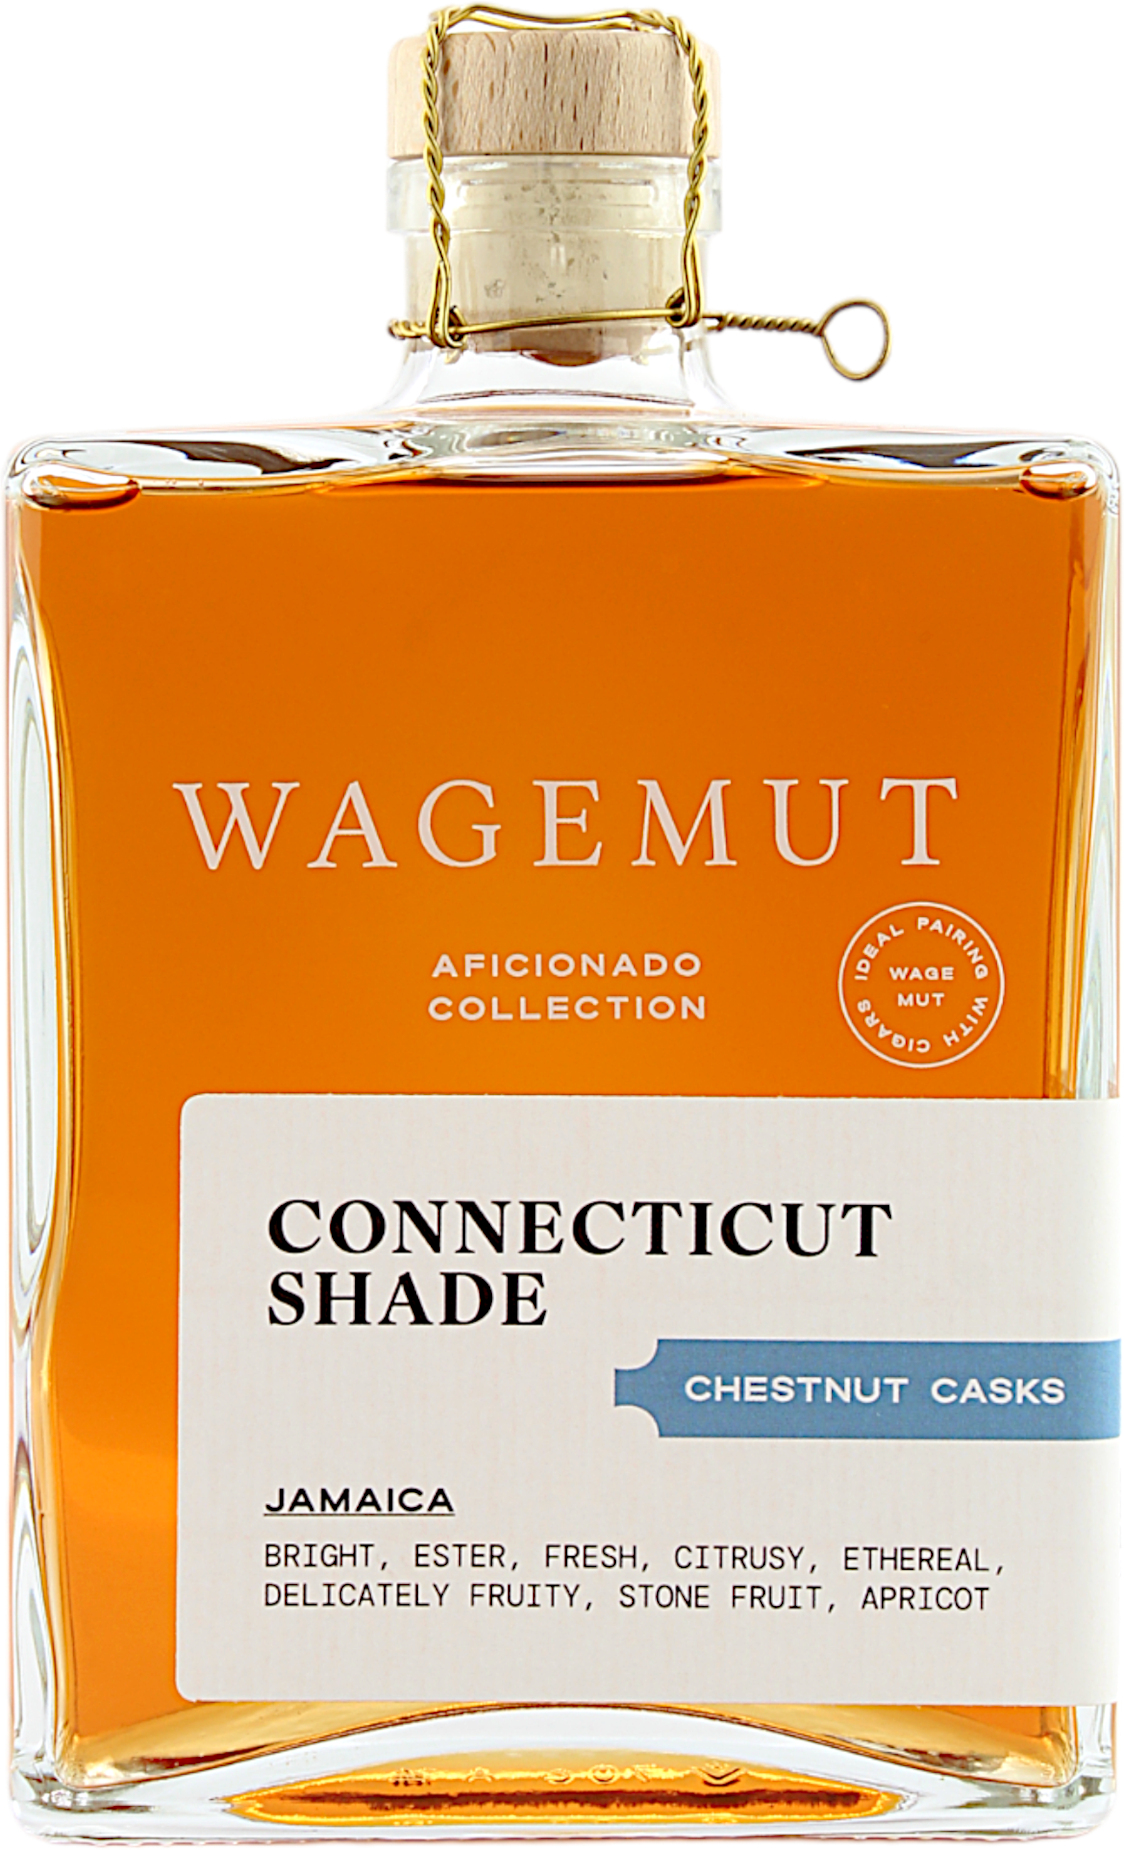 Wagemut Connecticut Shade (Aficionado Collection) 42.8% 0,7l